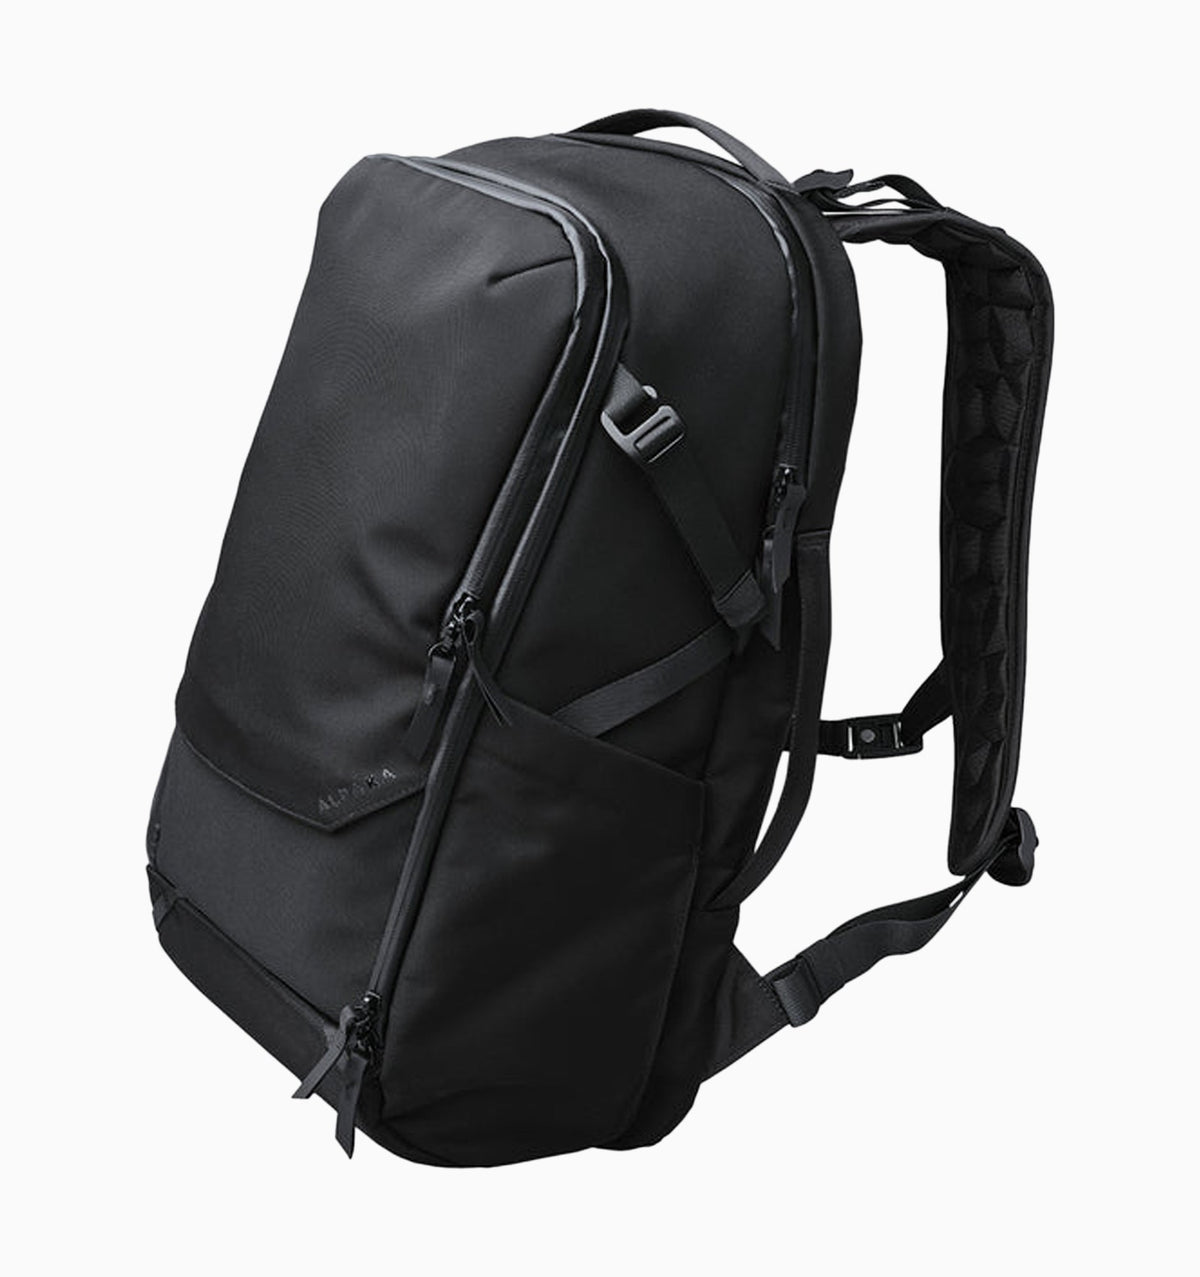 Alpaka 16" Elements Travel Backpack 35L - Jet Black Ballistic Nylon